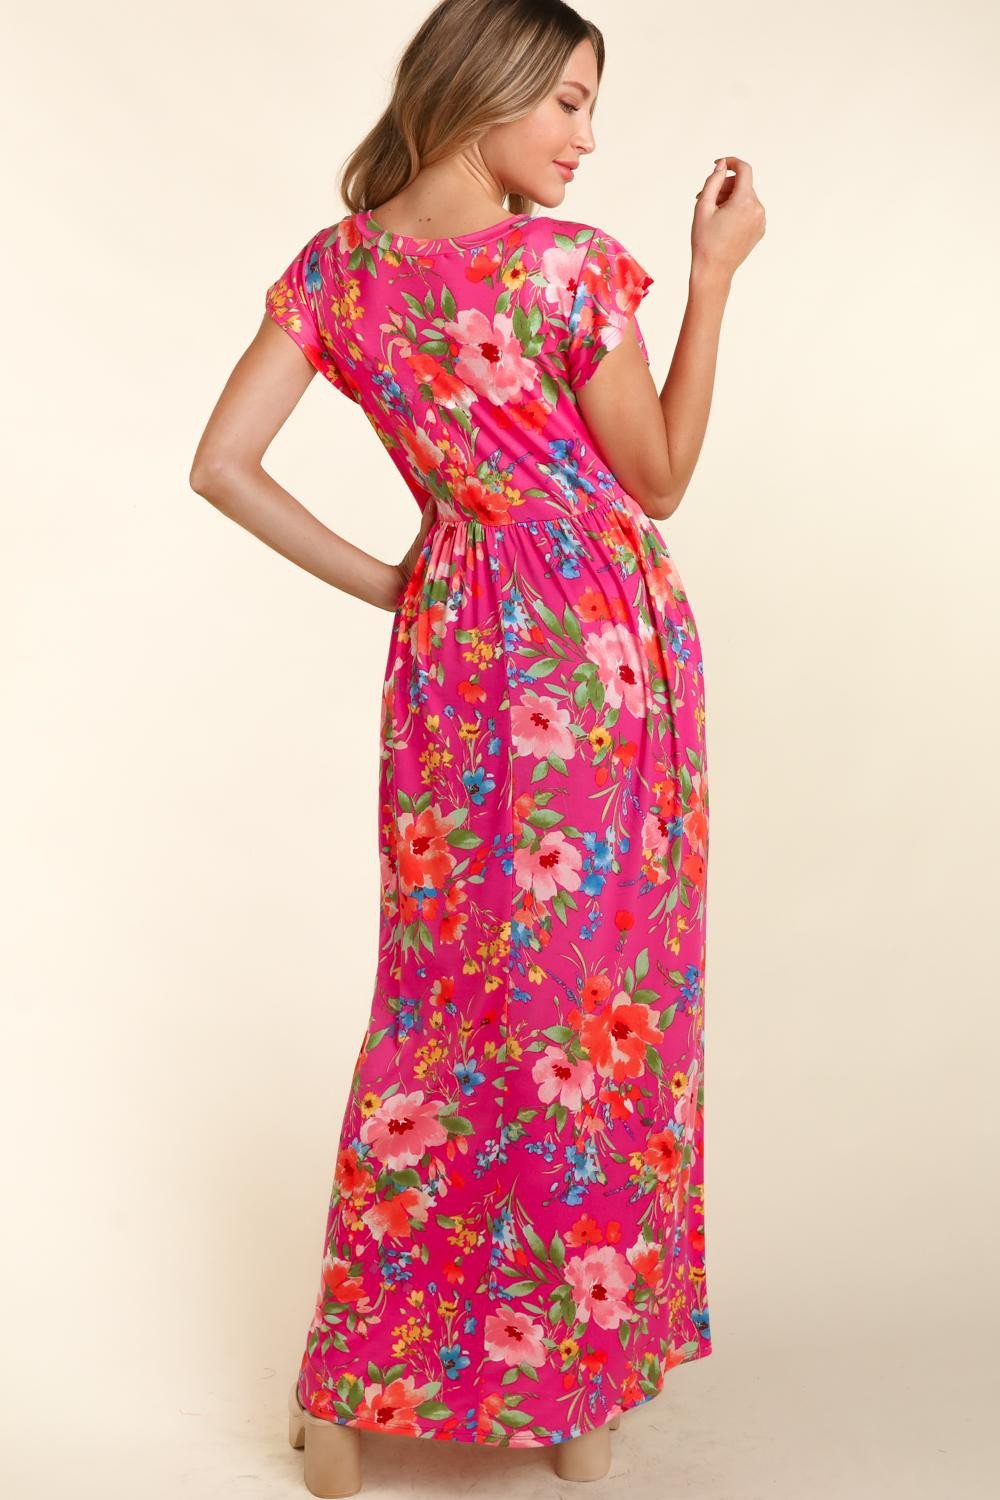 Floral Ruffled Cap Sleeve Maxi Dress in FuchsiaMaxi DressHaptics